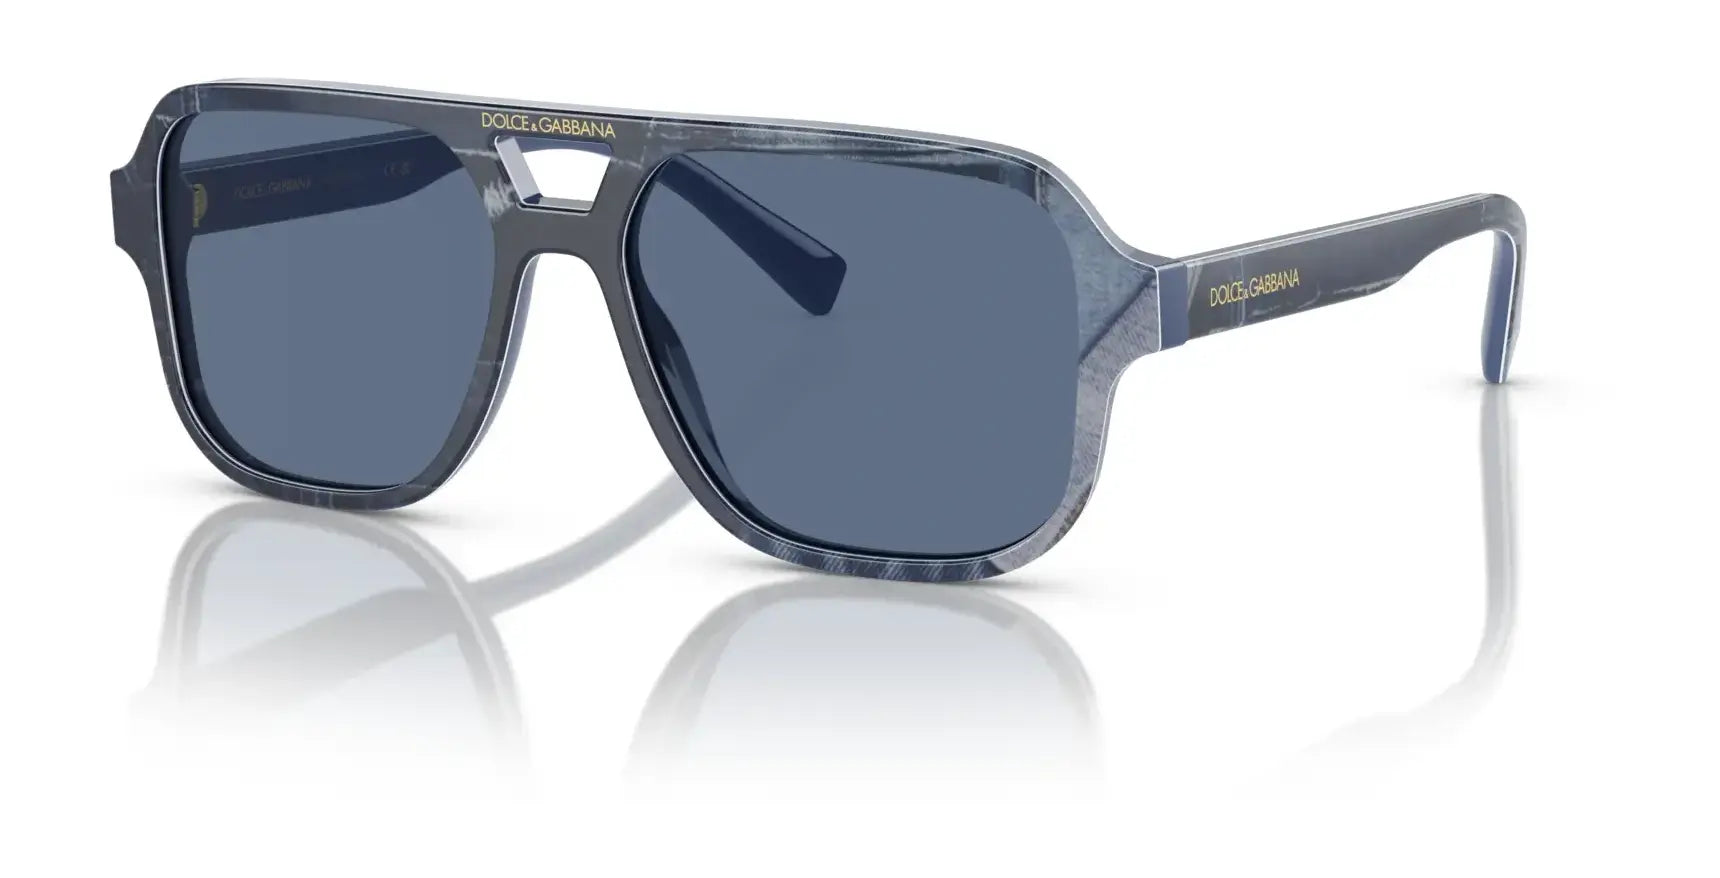 Dolce&Gabbana DX4003 Sunglasses Denim / Dark Blue